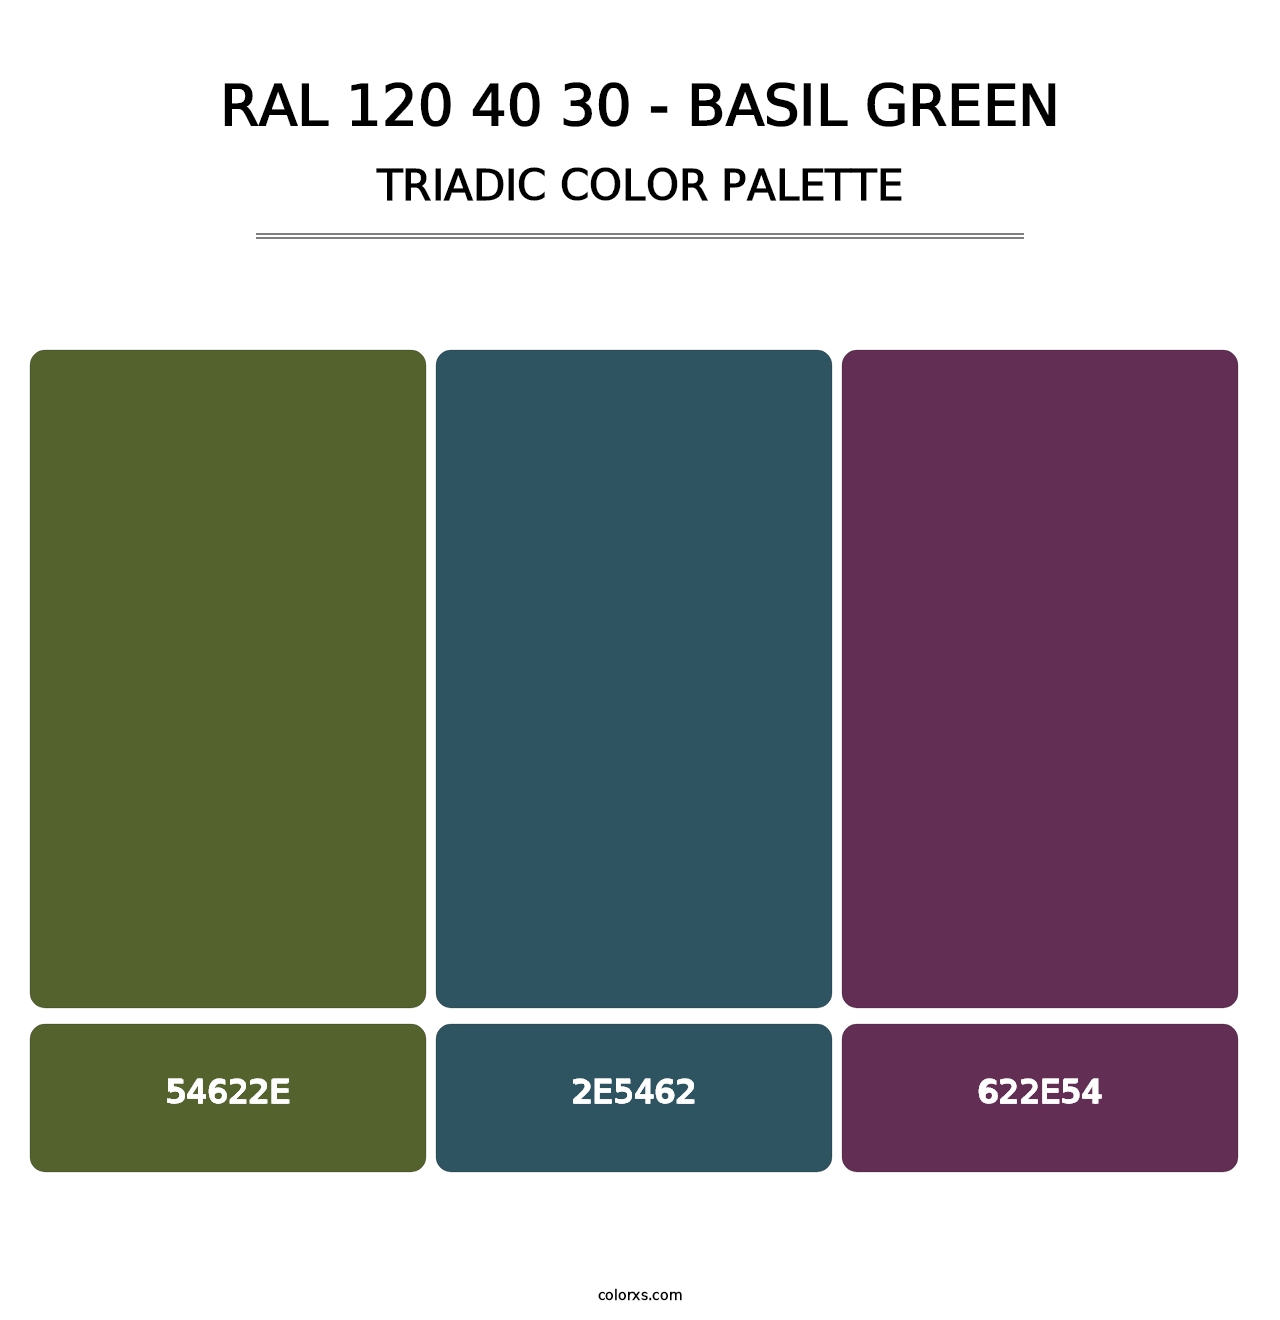 RAL 120 40 30 - Basil Green - Triadic Color Palette